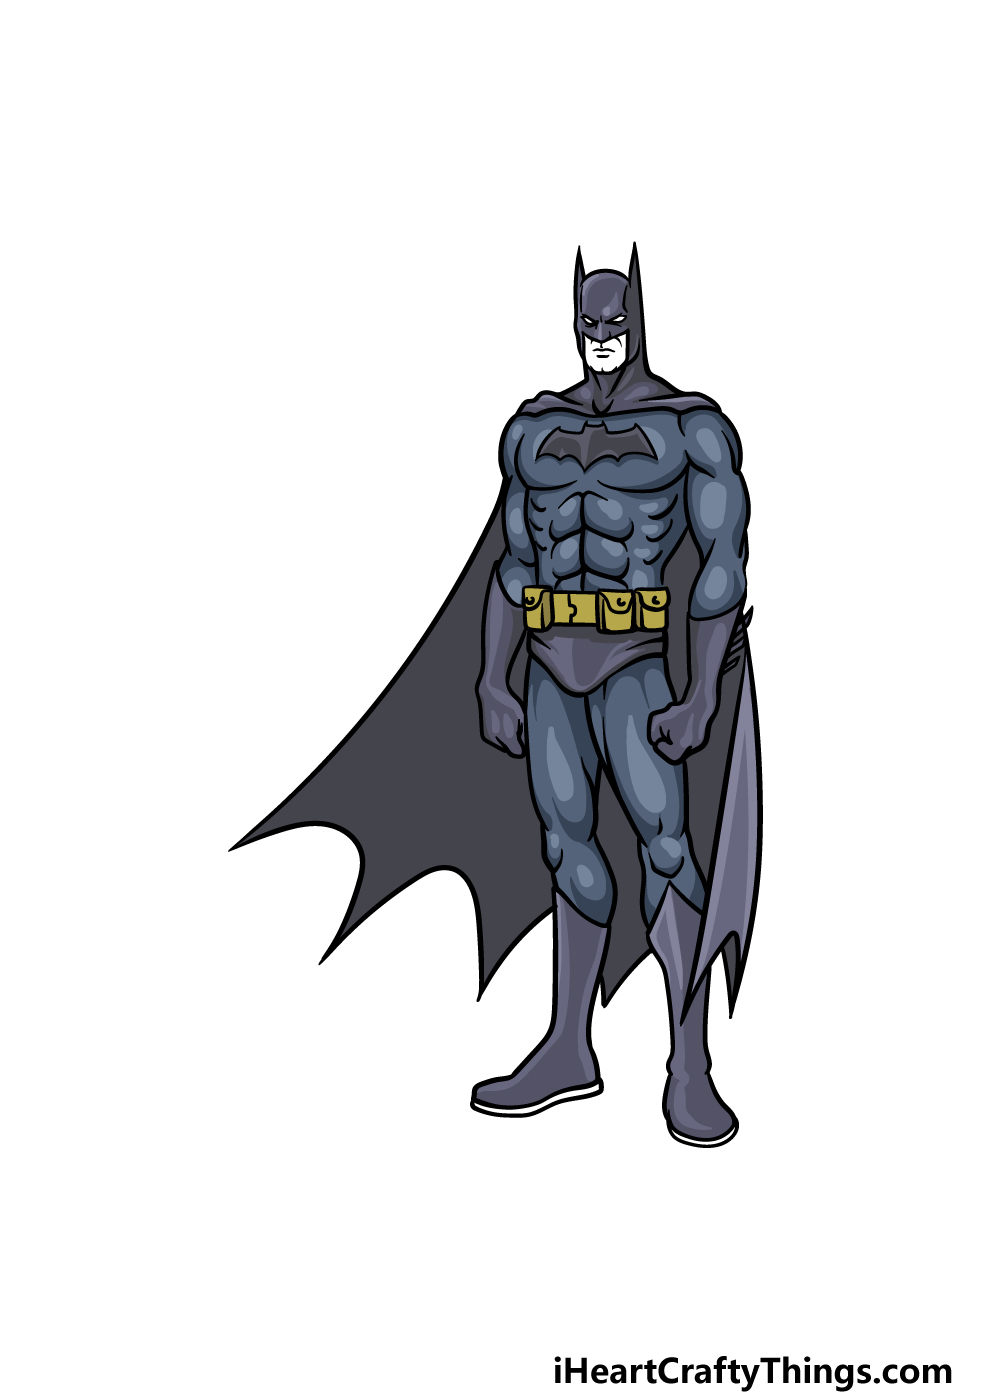 Batman Silhouette 3D Logo - Emblem, Ornament or Magnet !! | eBay